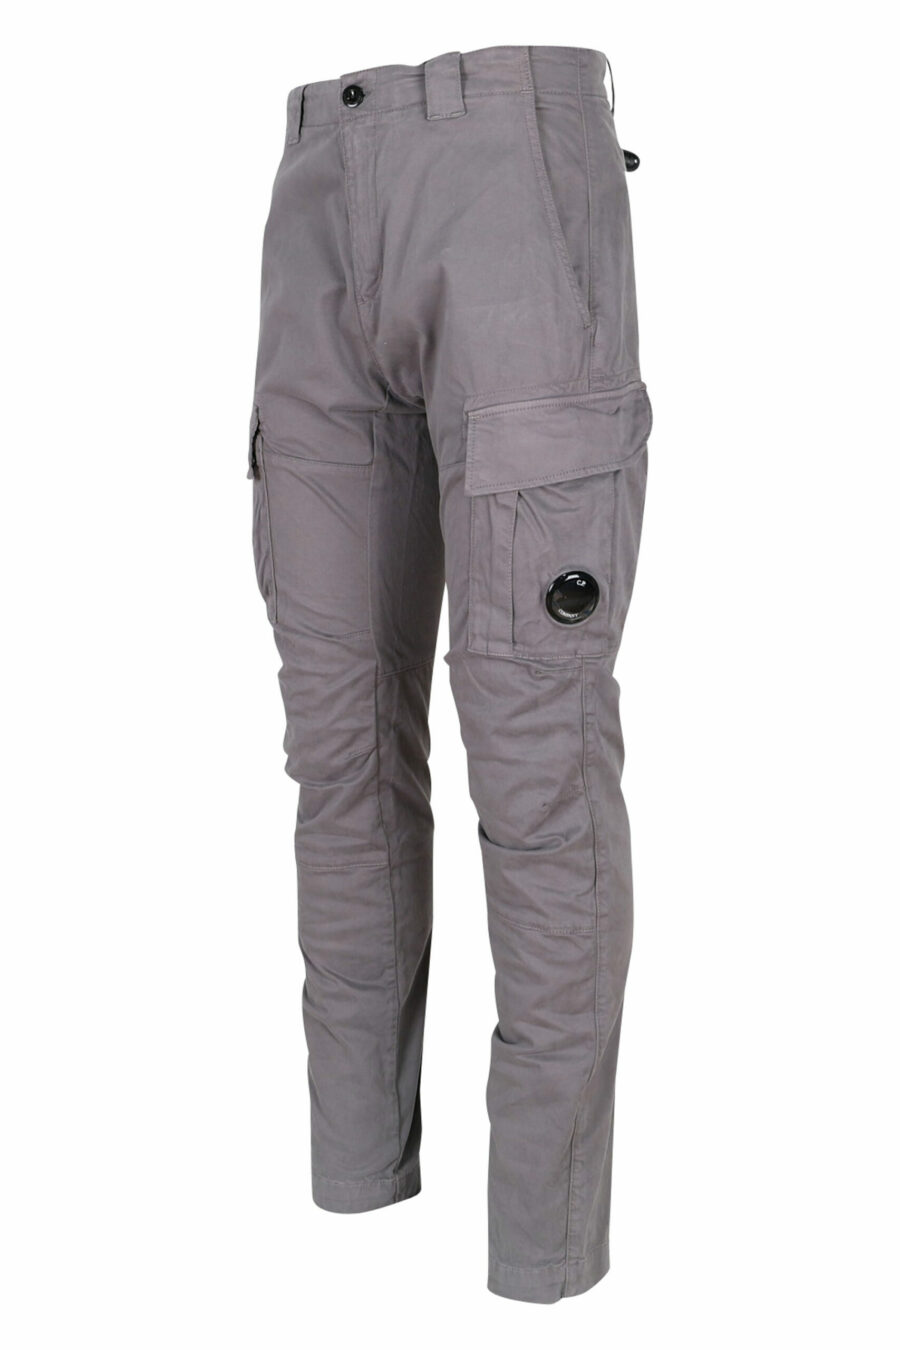 Pantalón gris marengo estilo cargo de satén elástico y logo lente - 7620943597400 1 scaled